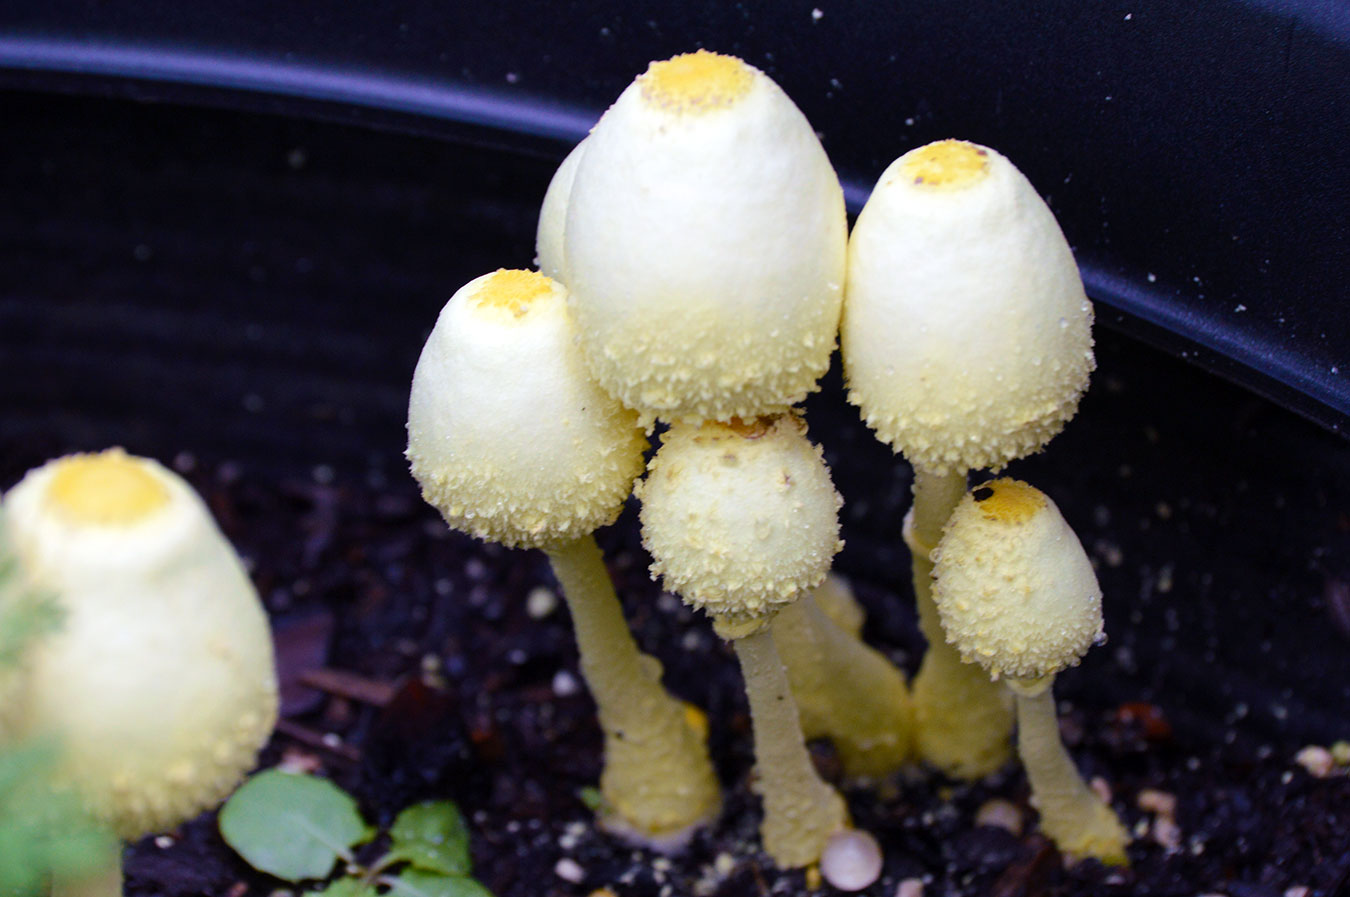 Yellow fungus in potting soil - the yellow houseplant mushroom